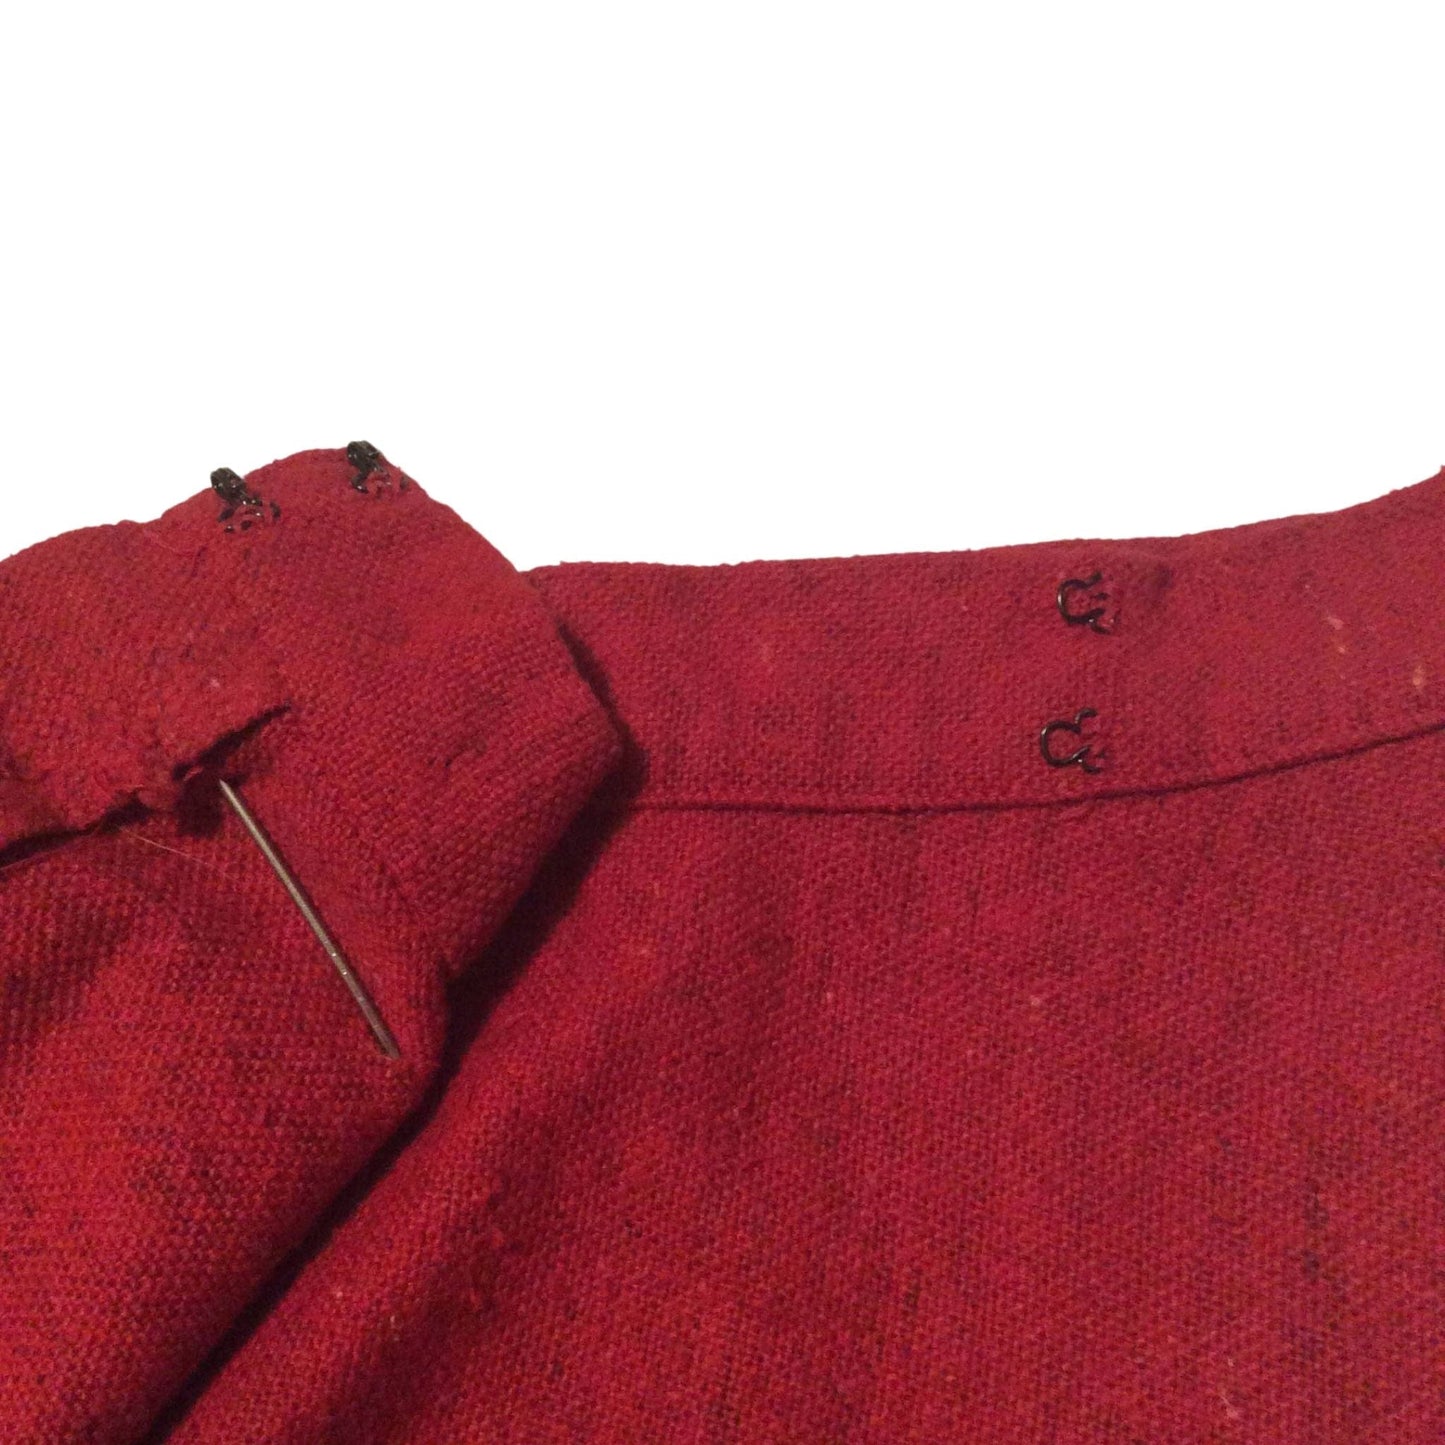 Vintage Raw Linen Skirt Medium / Red / Vintage 1930s